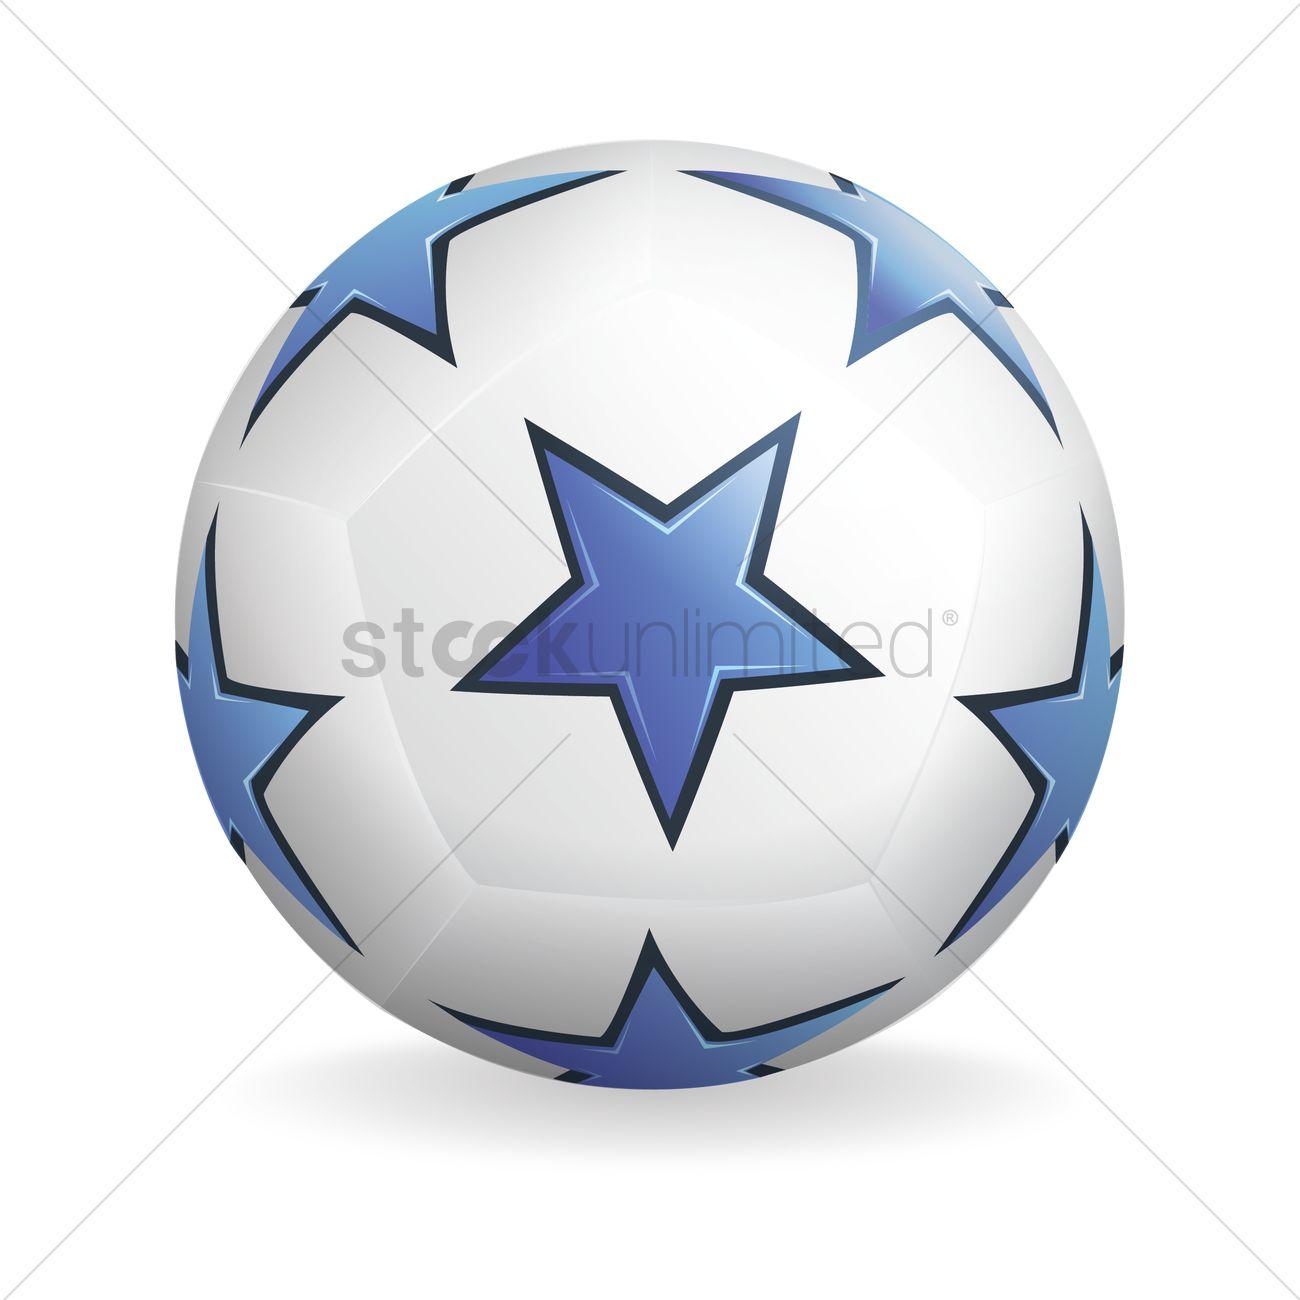 Ball Star Logo - Star pattern soccer ball Vector Image - 1504455 | StockUnlimited